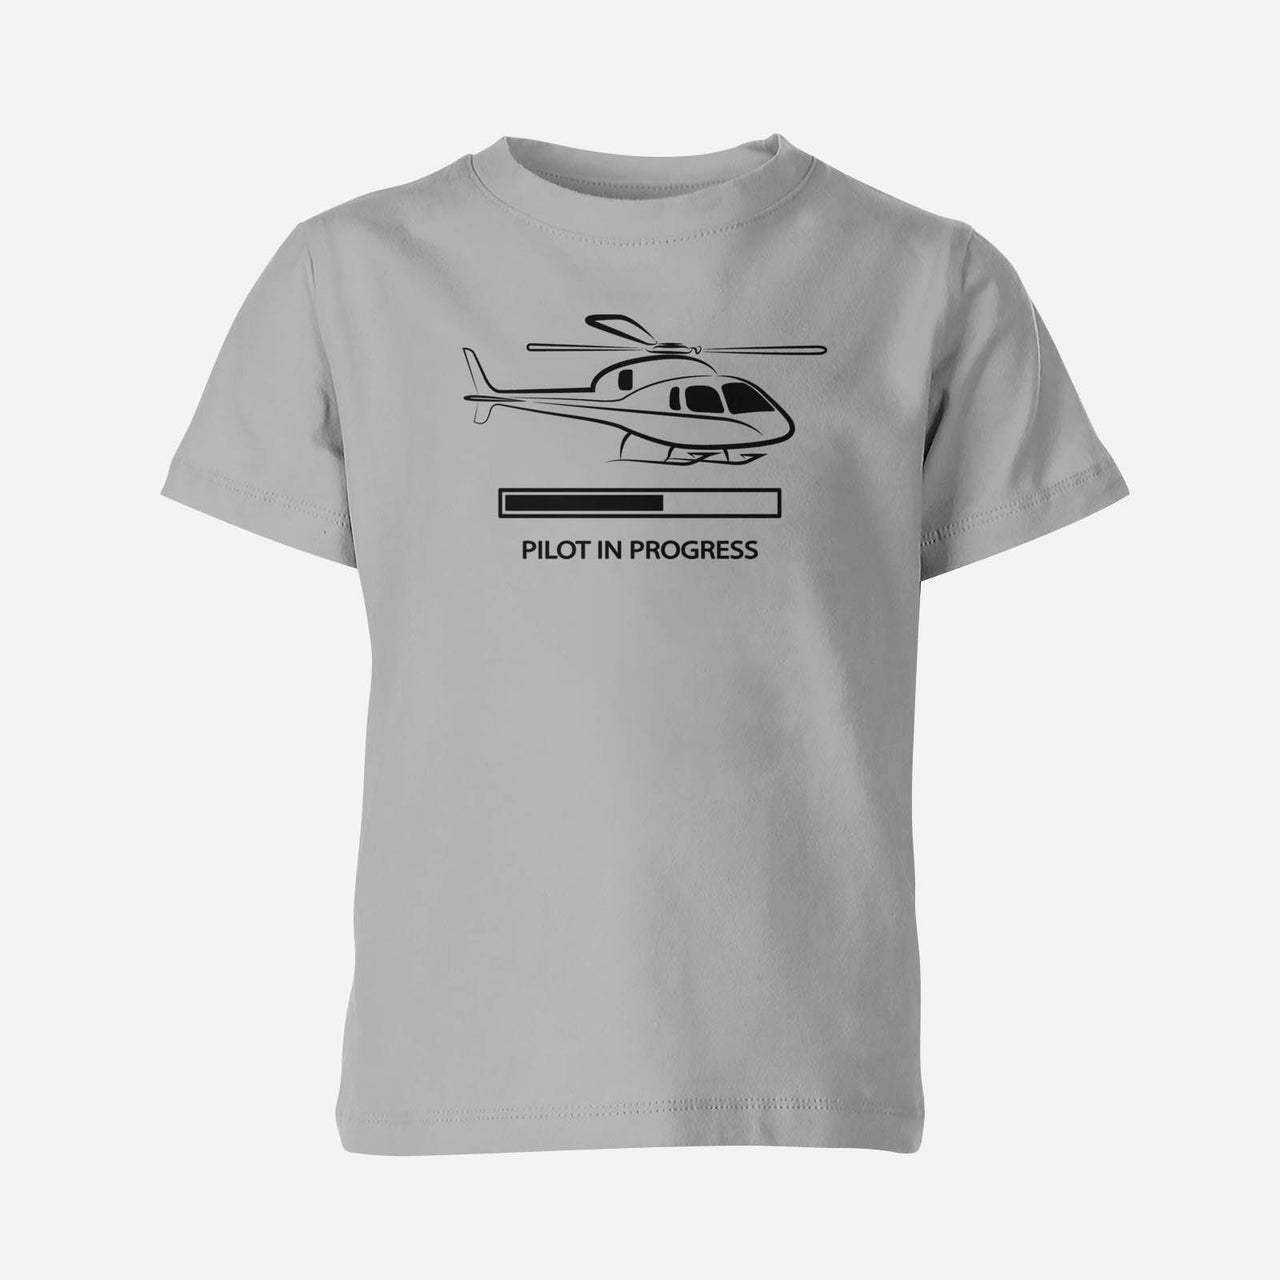 Pilot In Progress (Helicopter) Designed Children T-Shirts